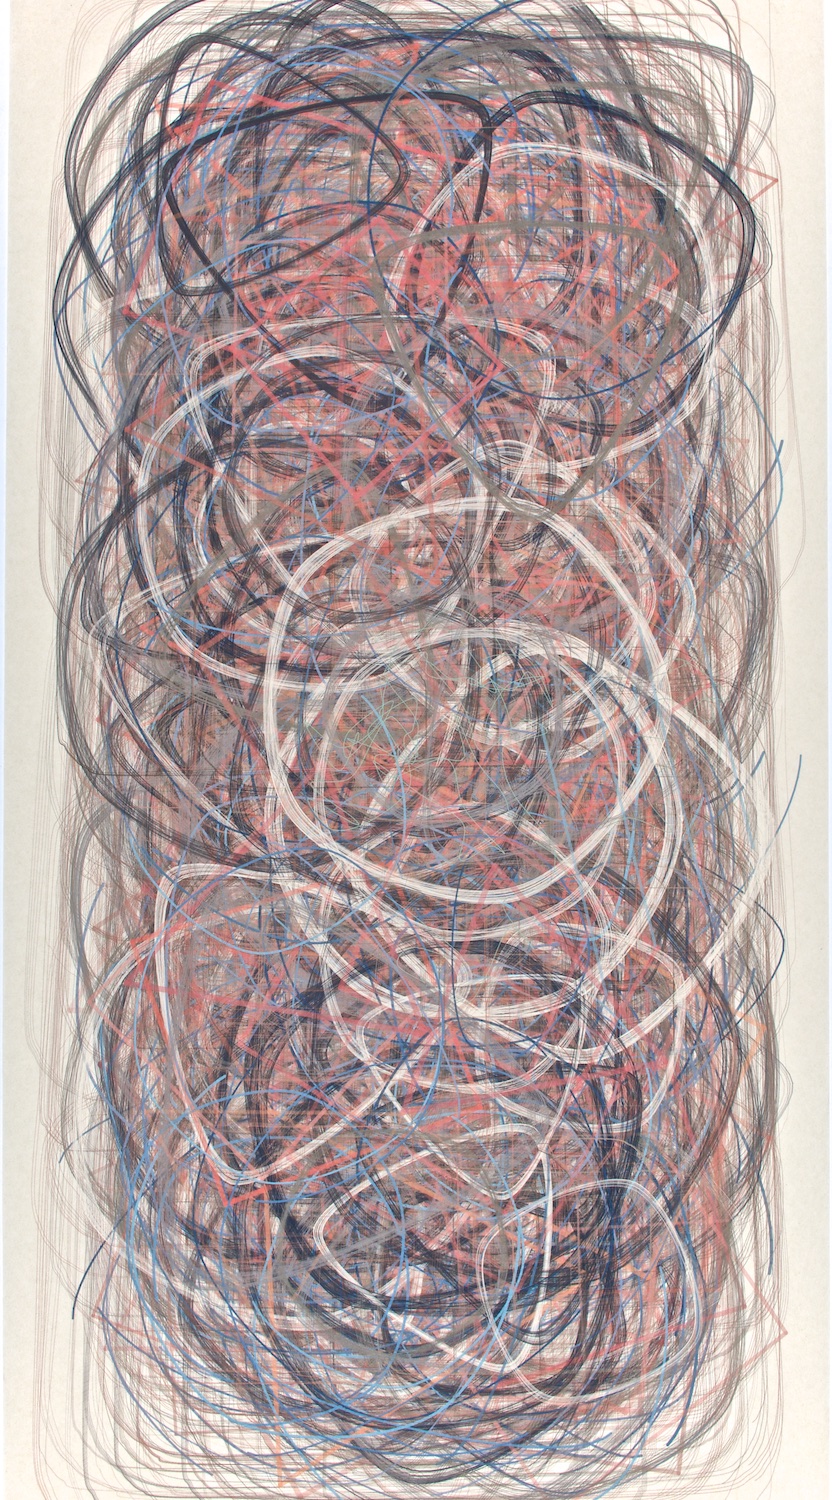   &nbsp;  I4    Digital drawing, inkjet pigments, 2013    Art : 33.75”x16”&nbsp;    Paper: 35”x17” Niyodo natural  